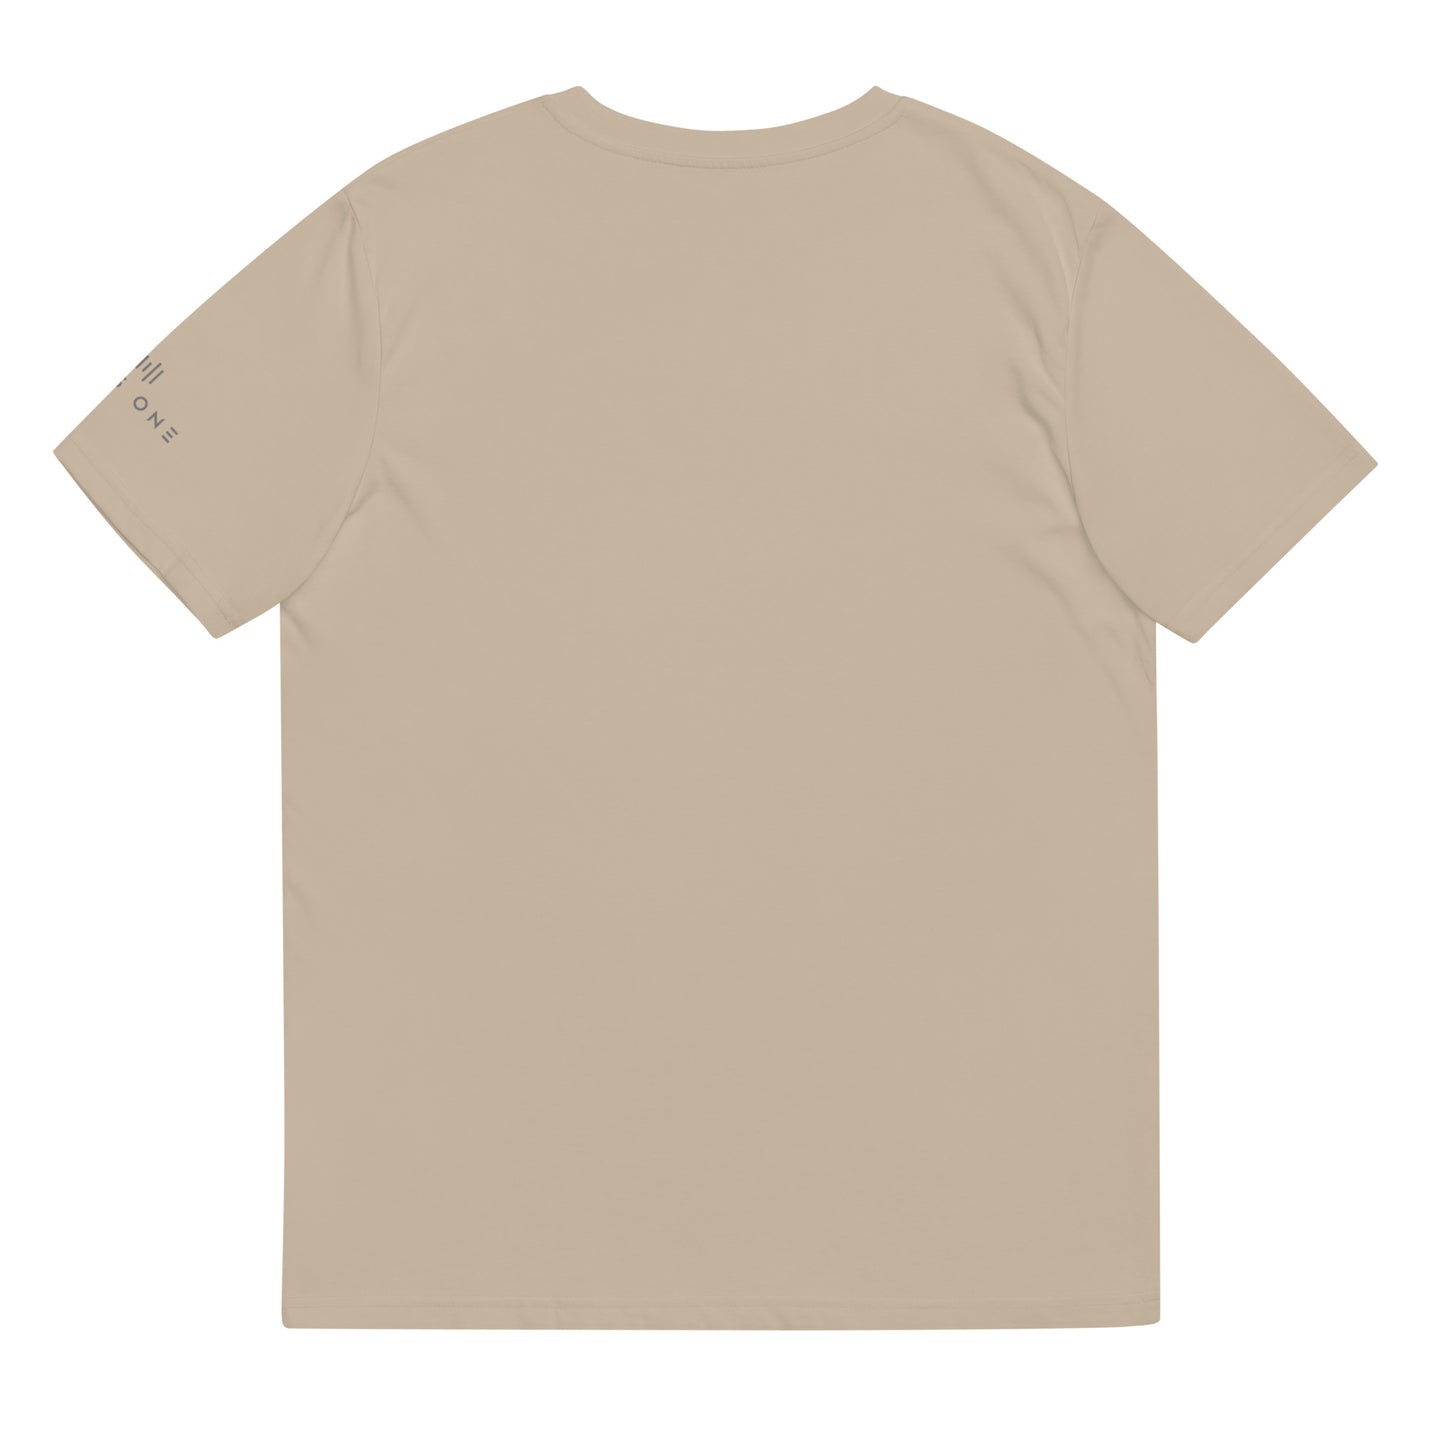 SK8 (v7) Unisex organic cotton t-shirt